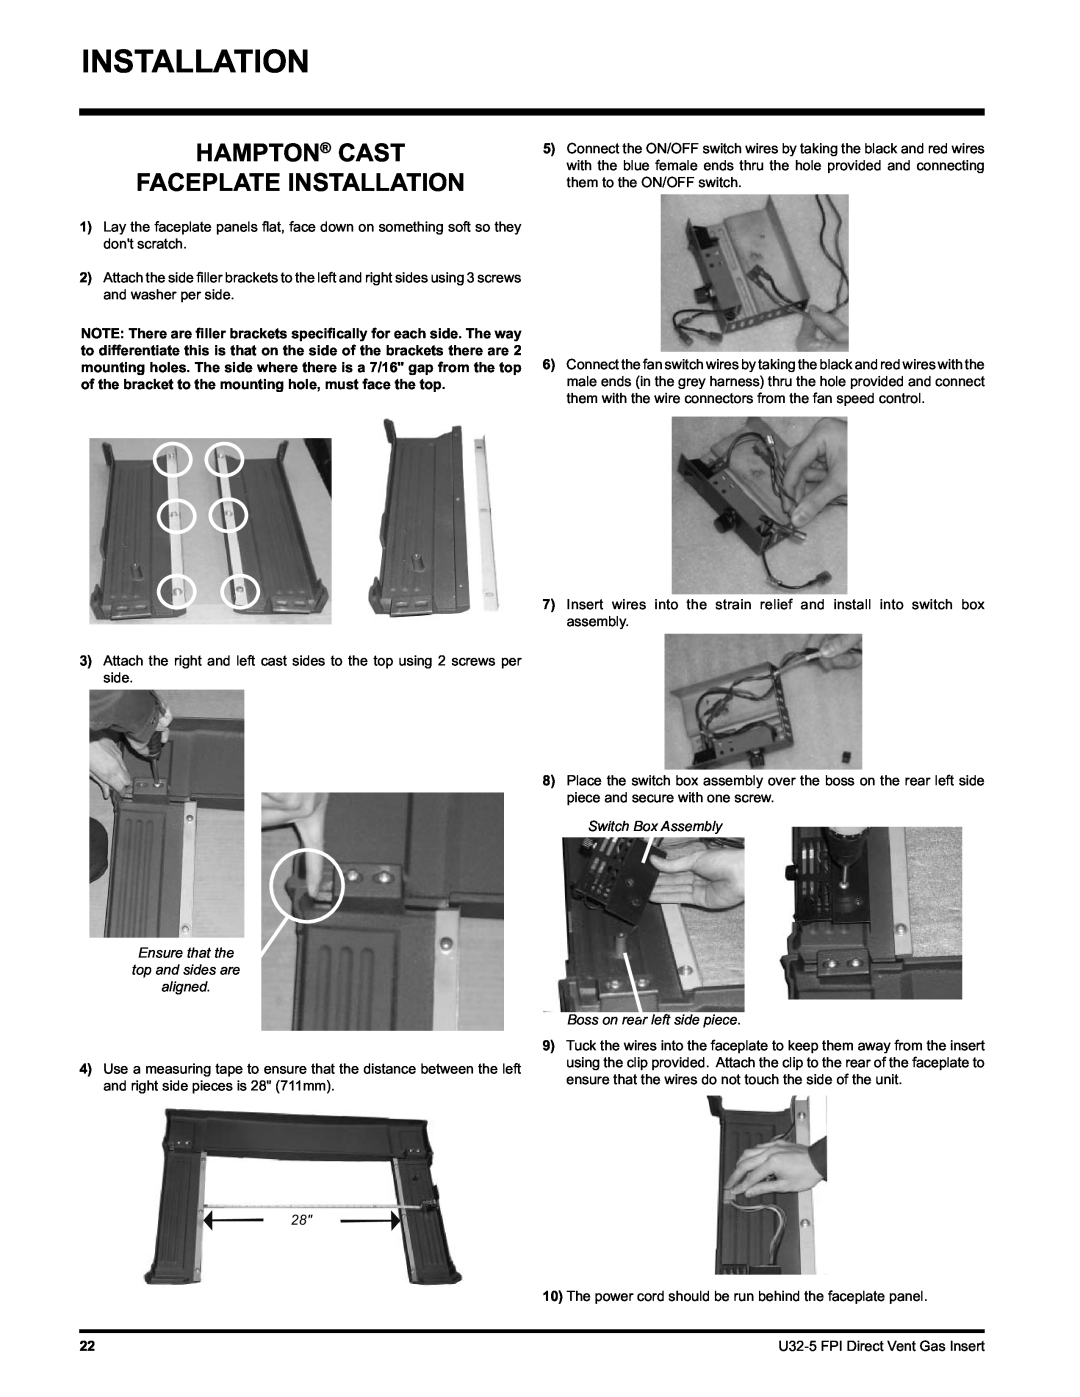 Hampton Direct U32 installation manual Hampton Cast Faceplate Installation 